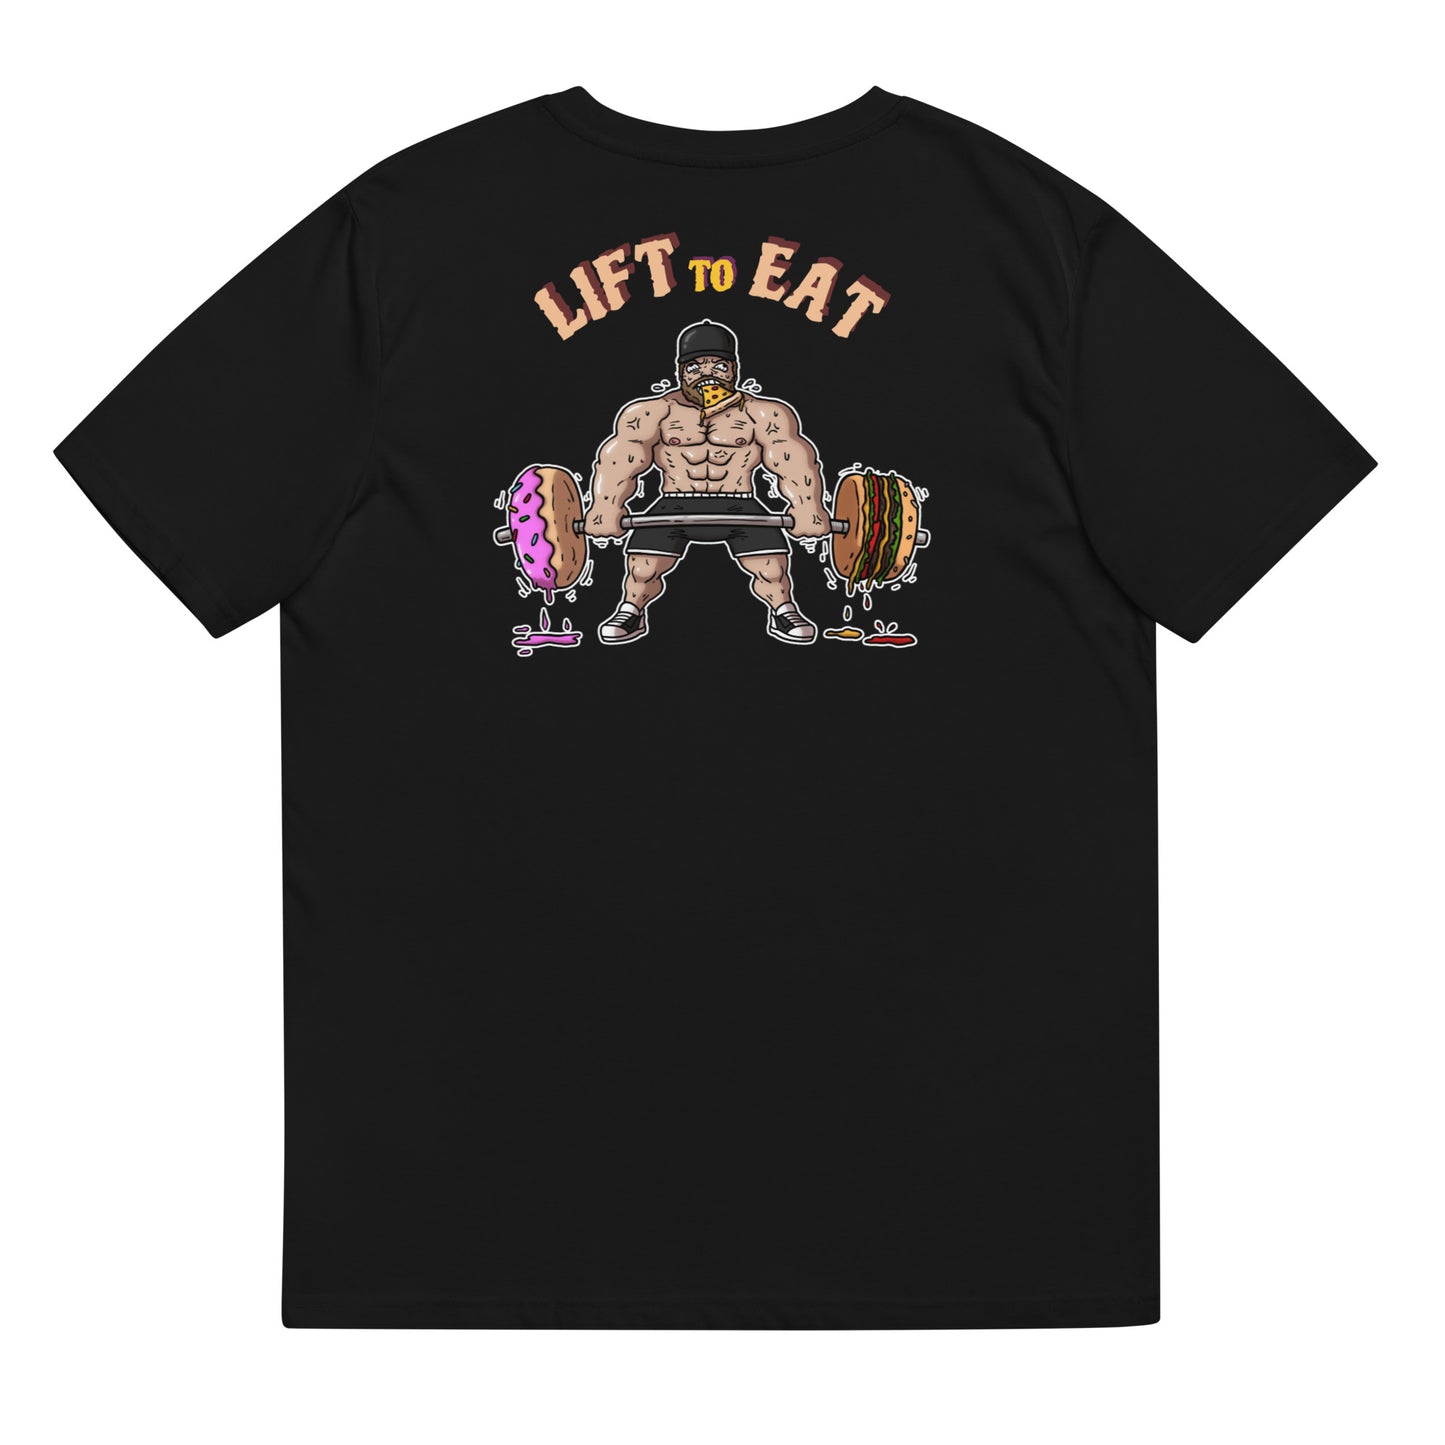 Lift to Eat shirt